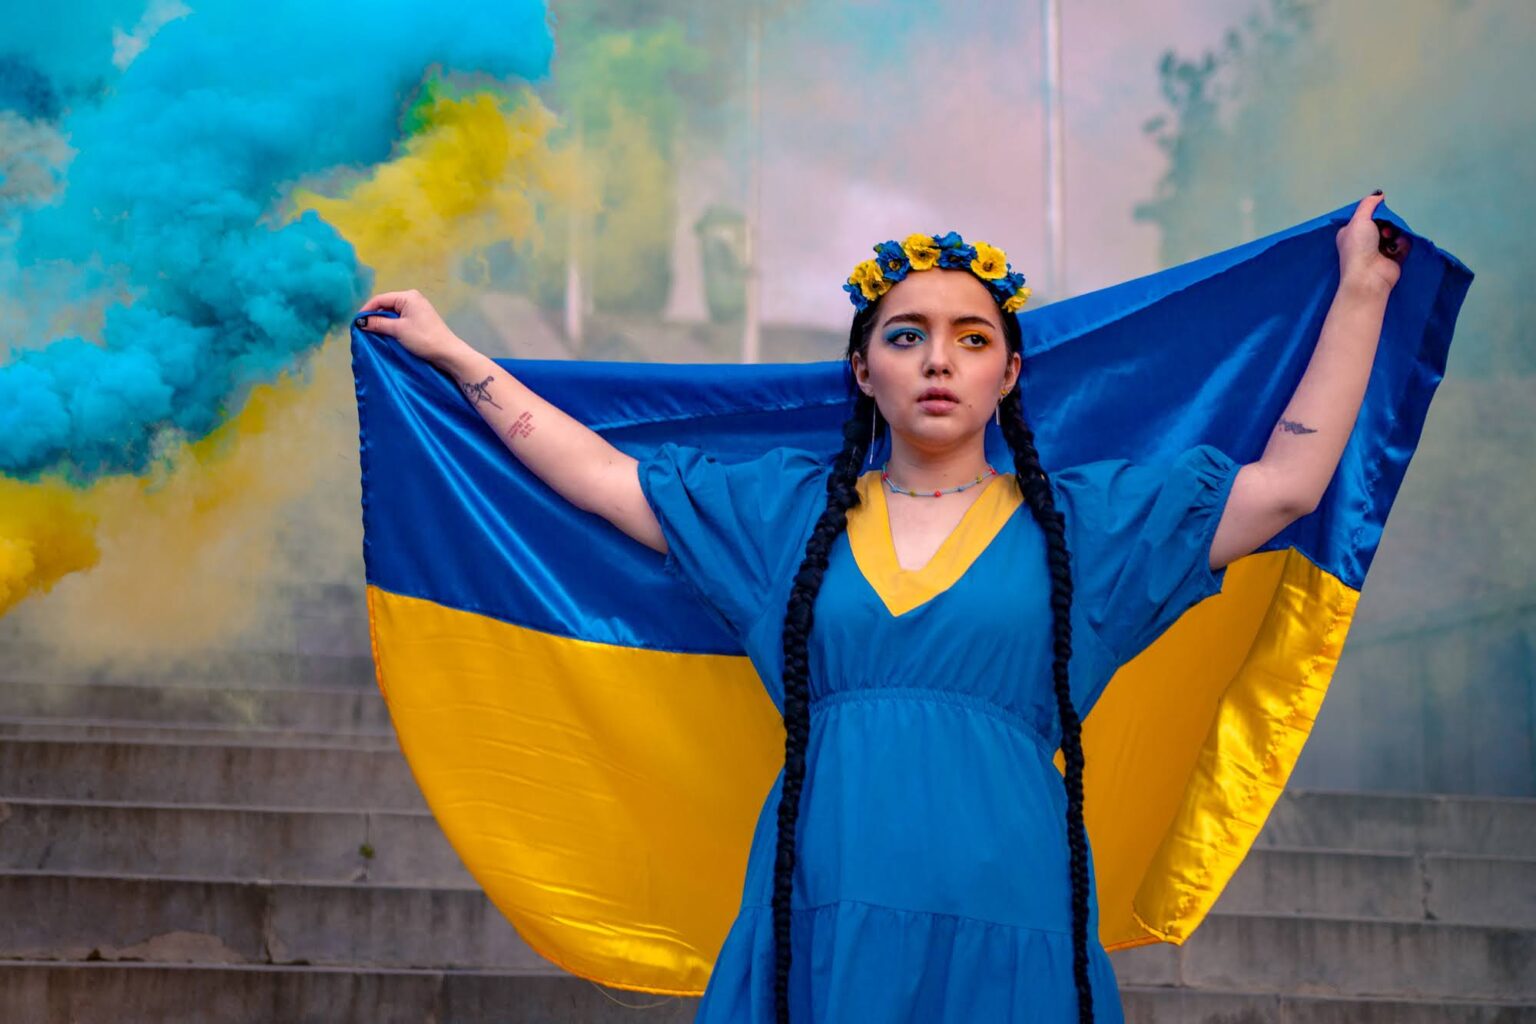 vera oleynikova ukraine demonstration 1536x1024 1 эмиграция эмиграция